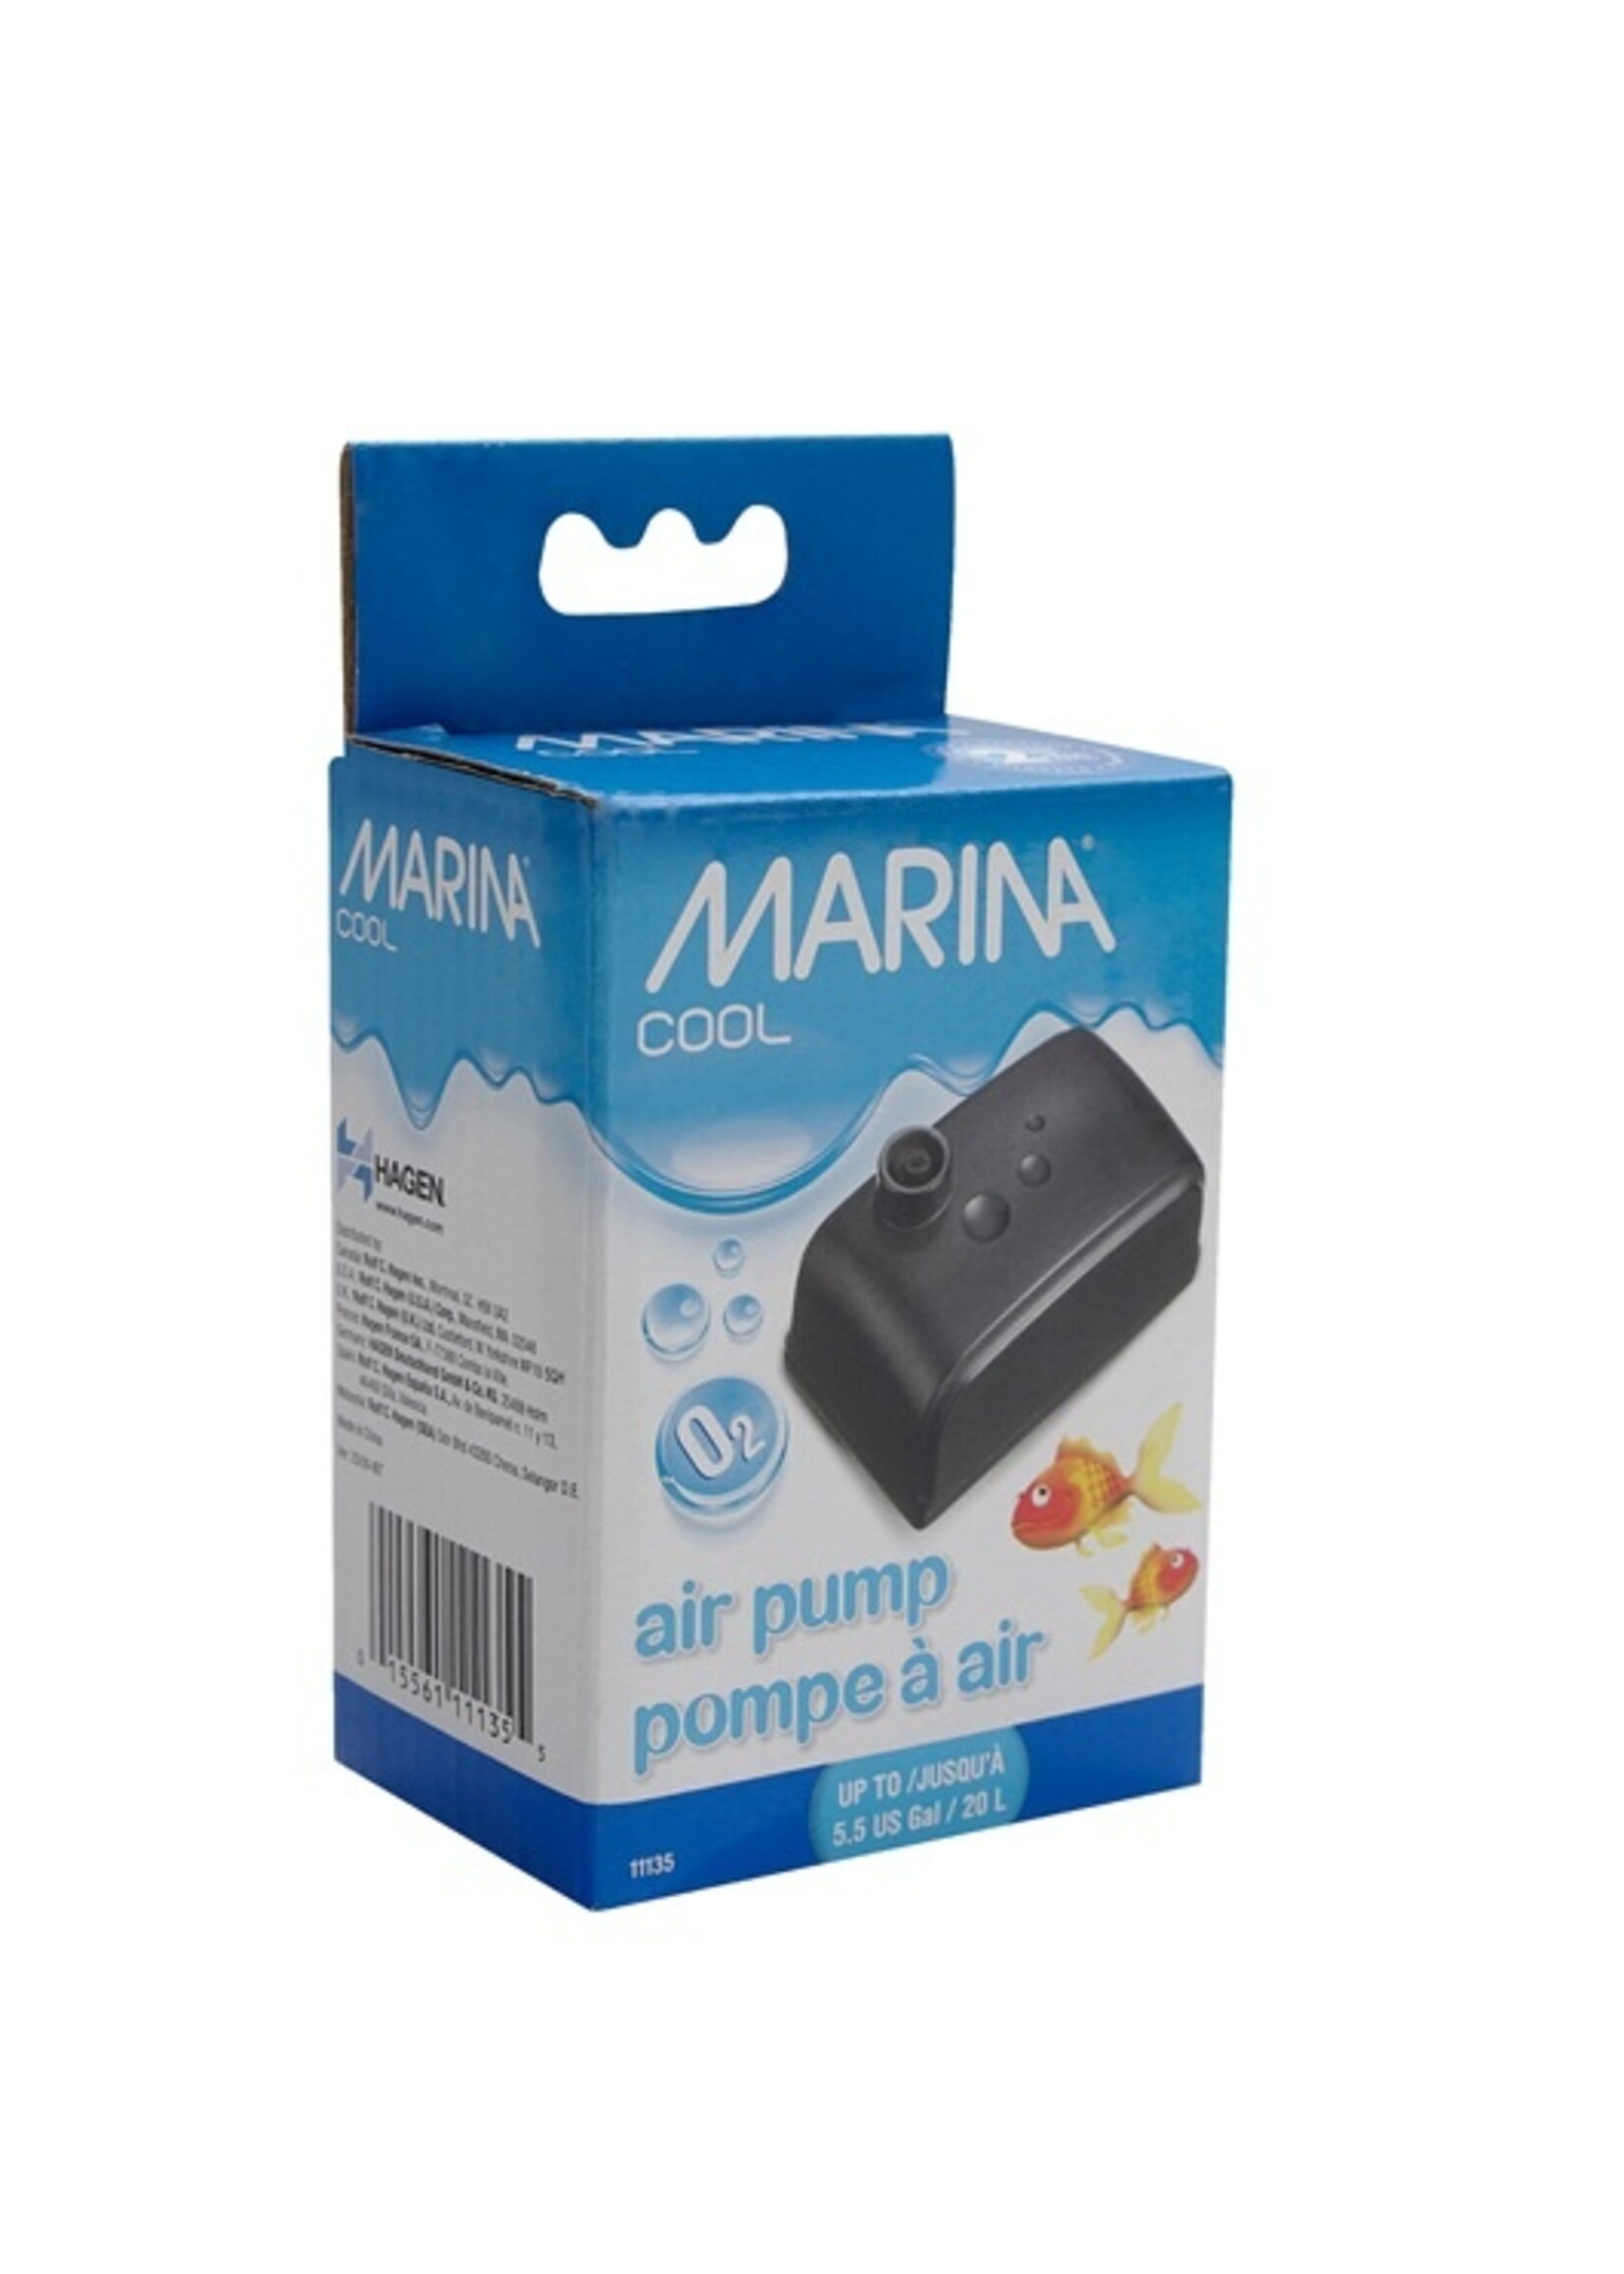 Marina Marina Cool Air Pump 5.5 U.S Gal